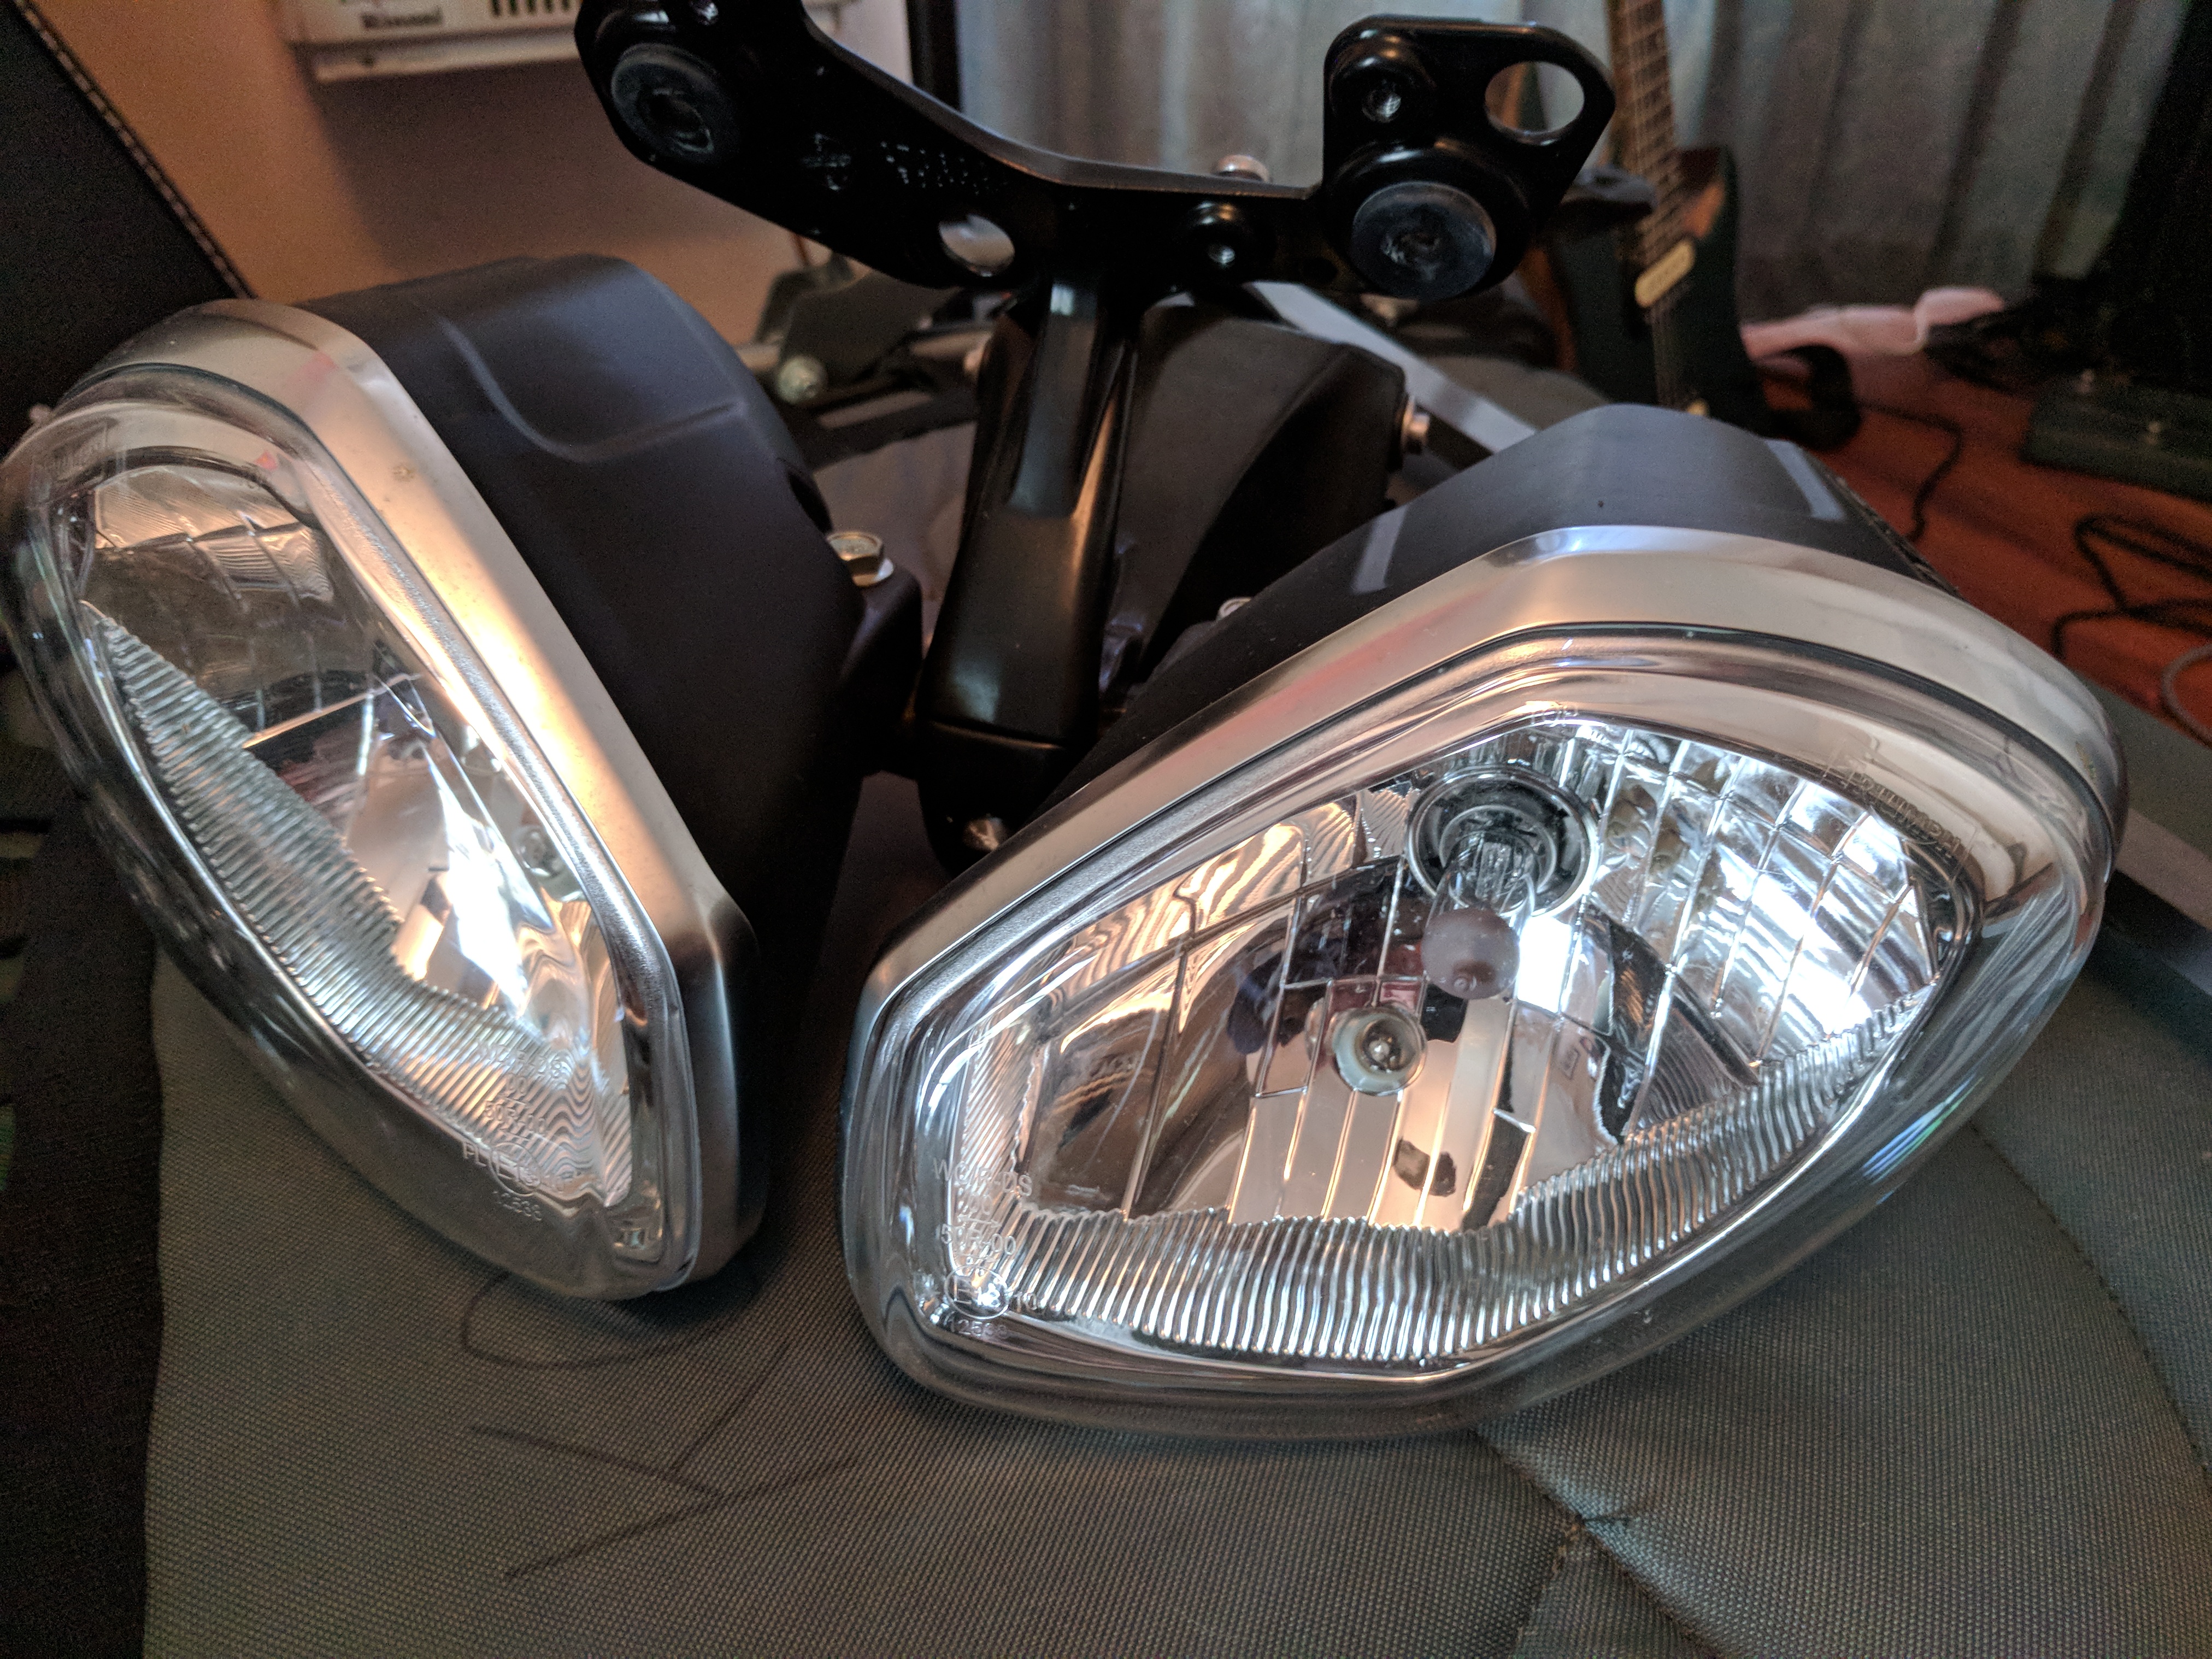 2013 street headlight lens? - Triumph Forum: Triumph Rat Motorcycle ...